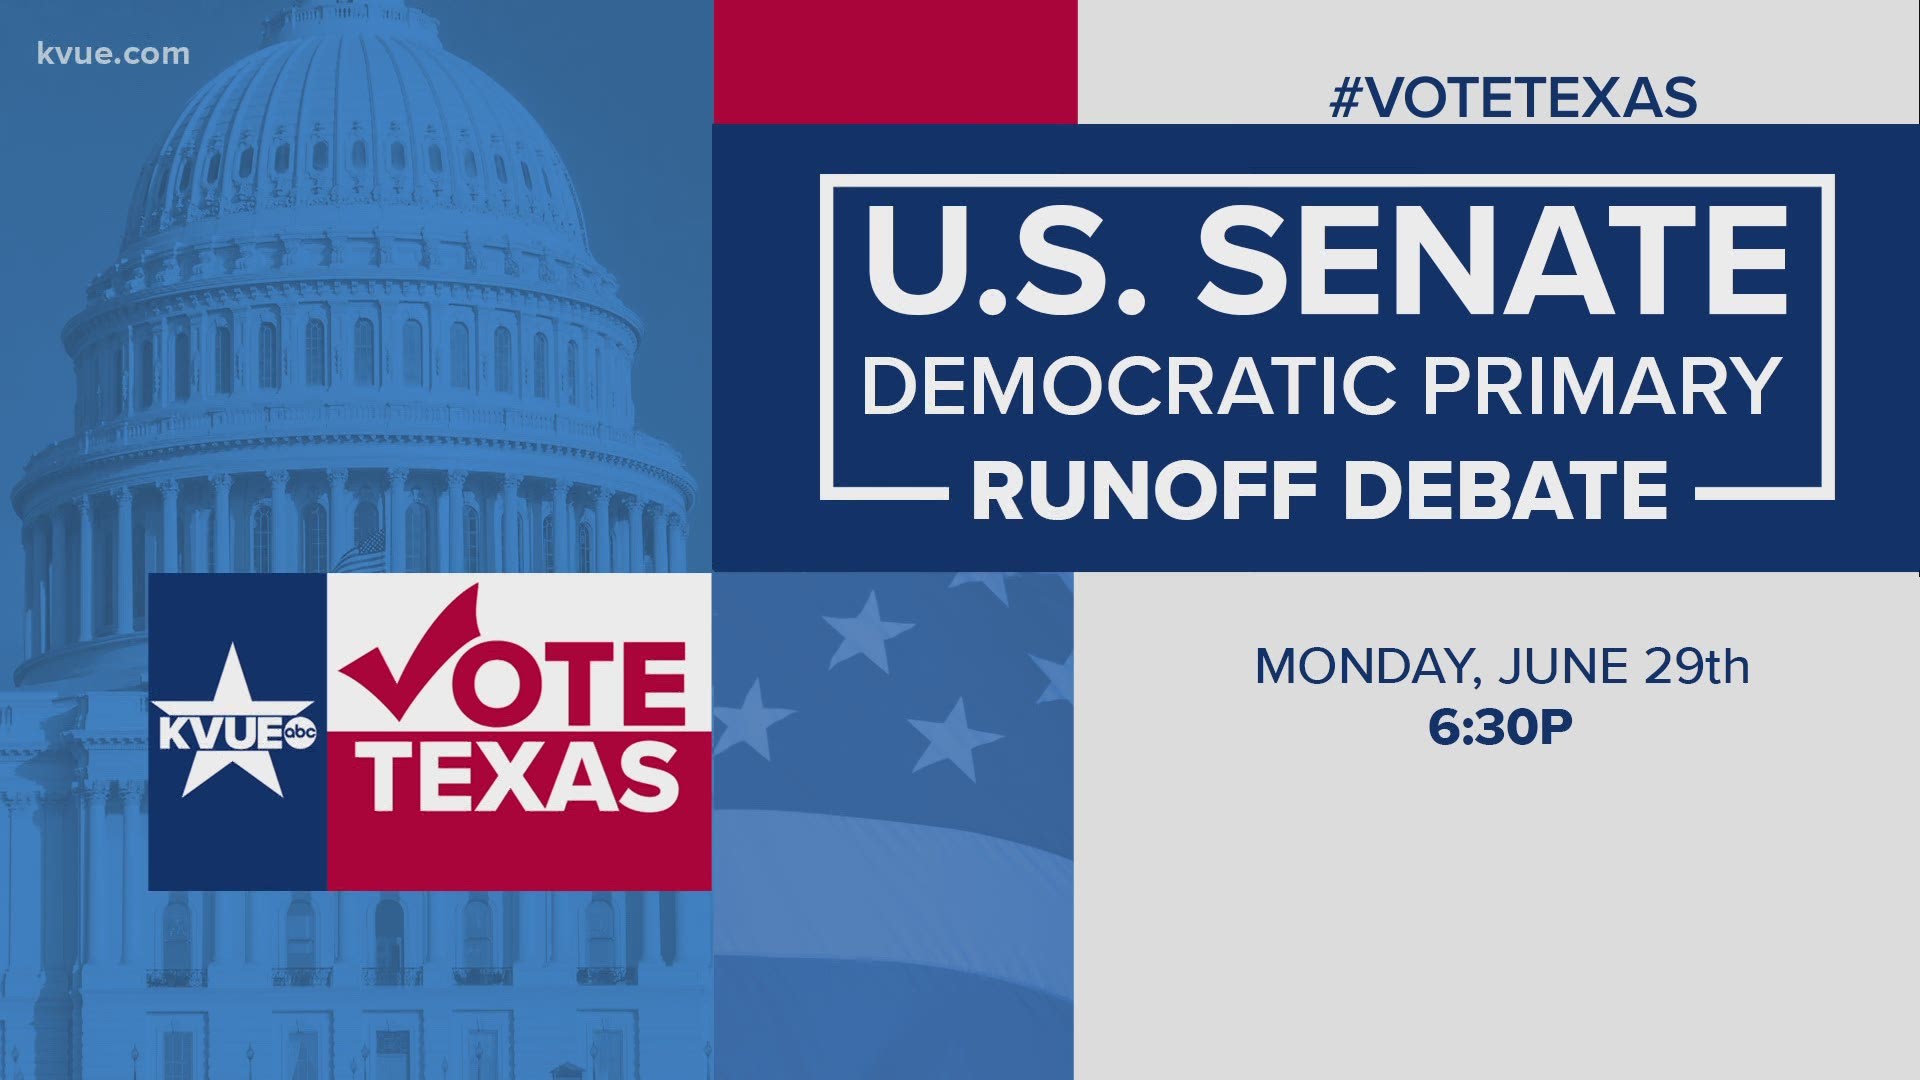 KVUE is hosting a debate between the Democratic candidates facing off for U.S. Senate, MJ Hegar and State Sen. Royce West.